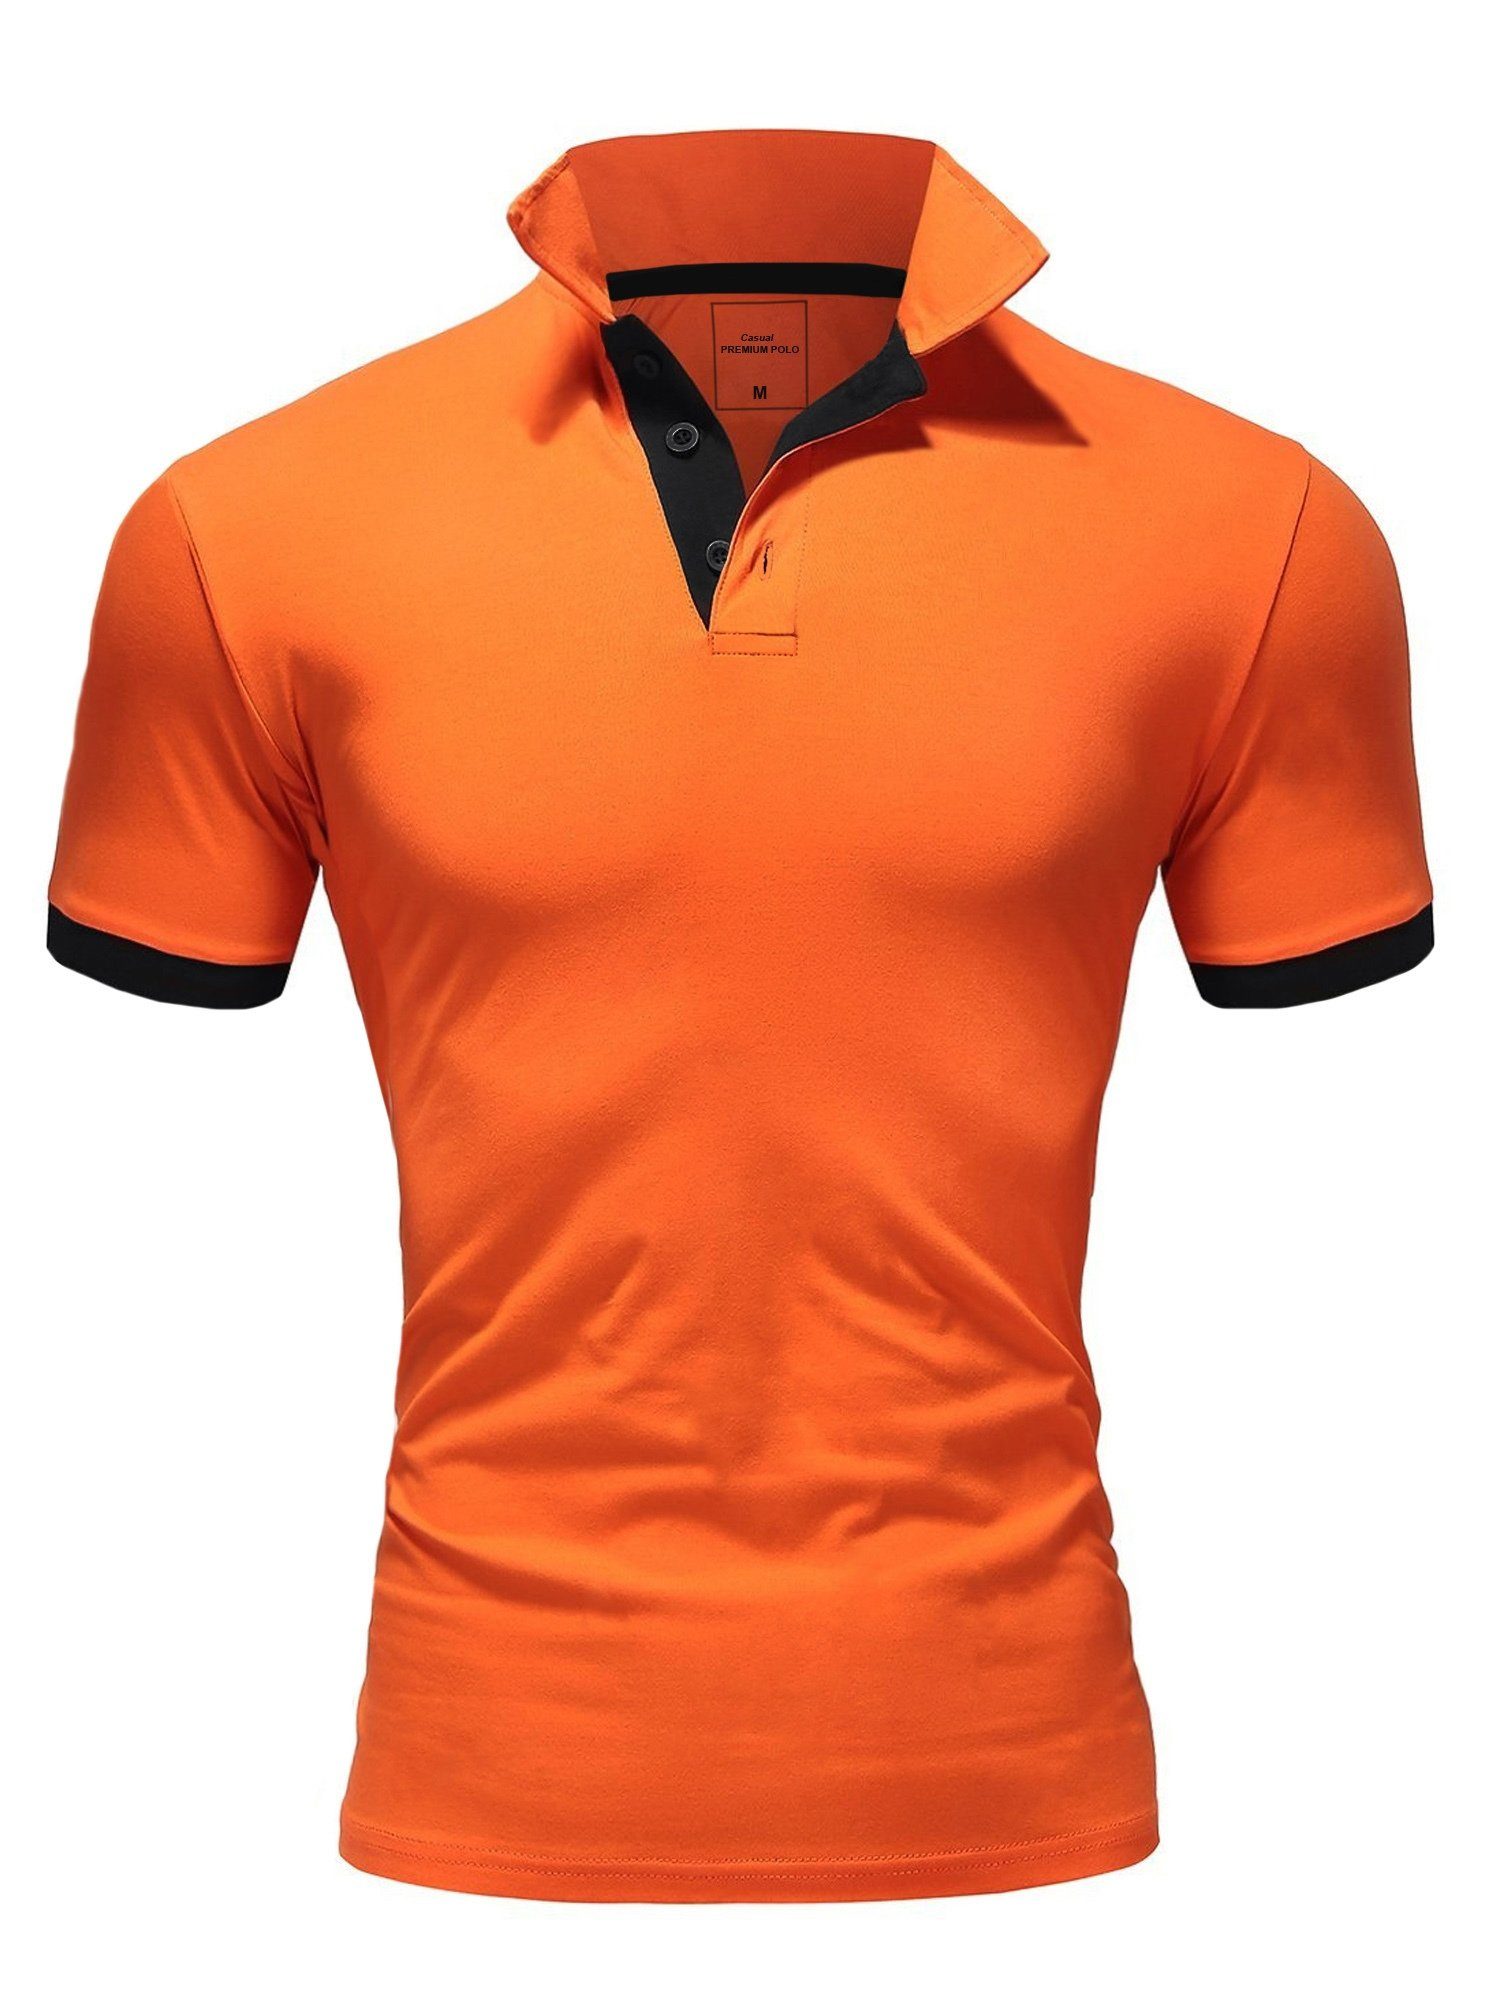 Amaci&Sons Poloshirt DETROIT Basic Kontrast Poloshirt Orange/Schwarz